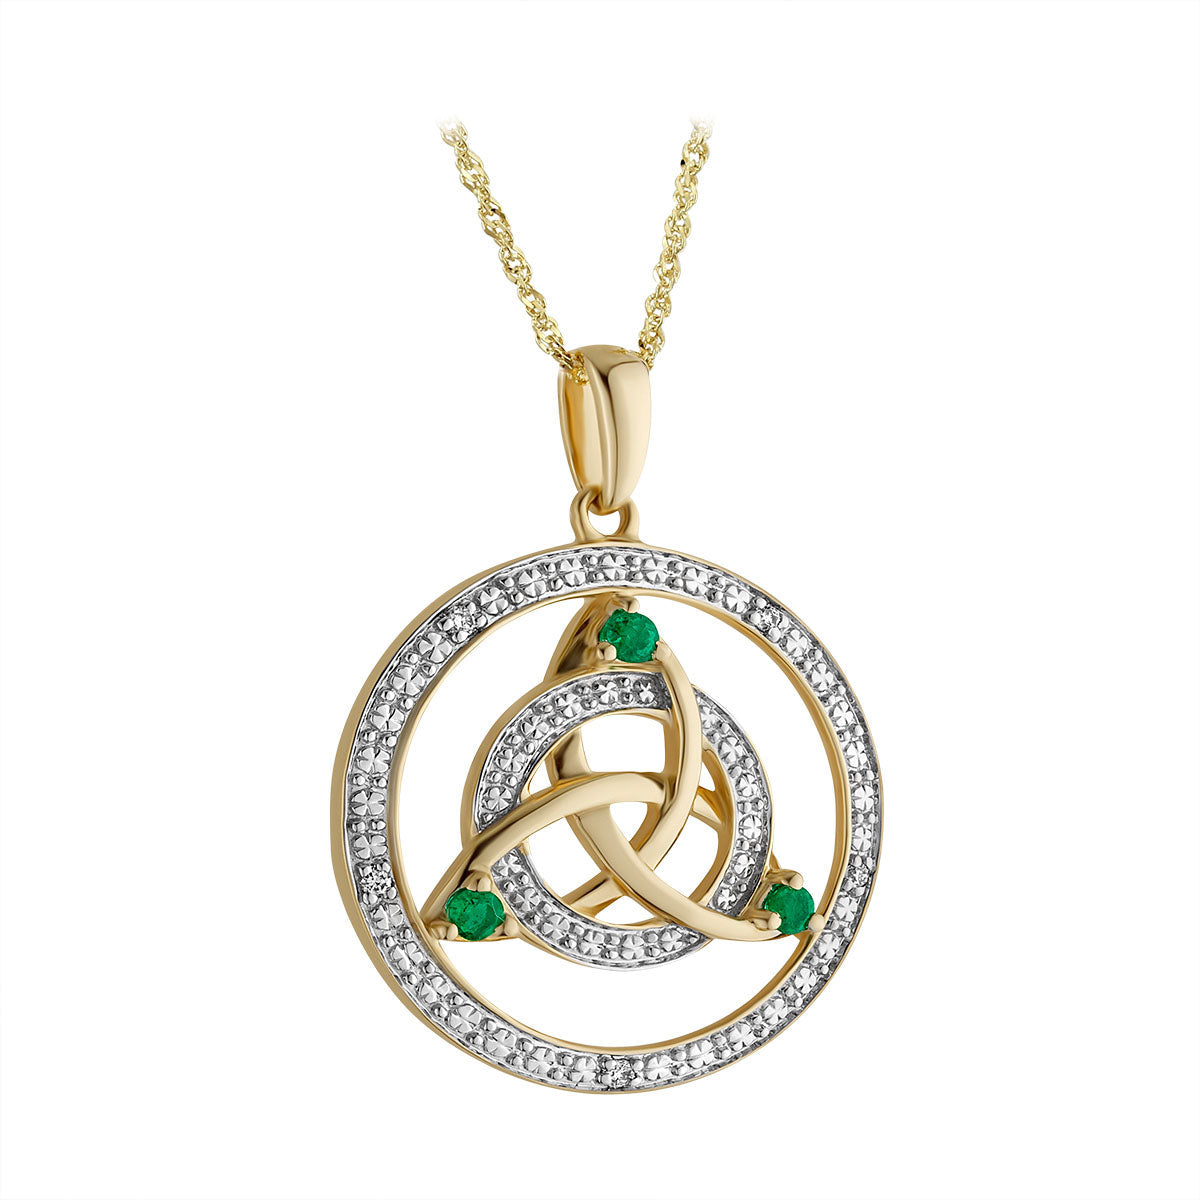 14 karat White & Yellow Gold Diamond & Emerald Round Celtic Knot Necklace S46788 on 18 inch 14 karat gold Sing chain from Solvar